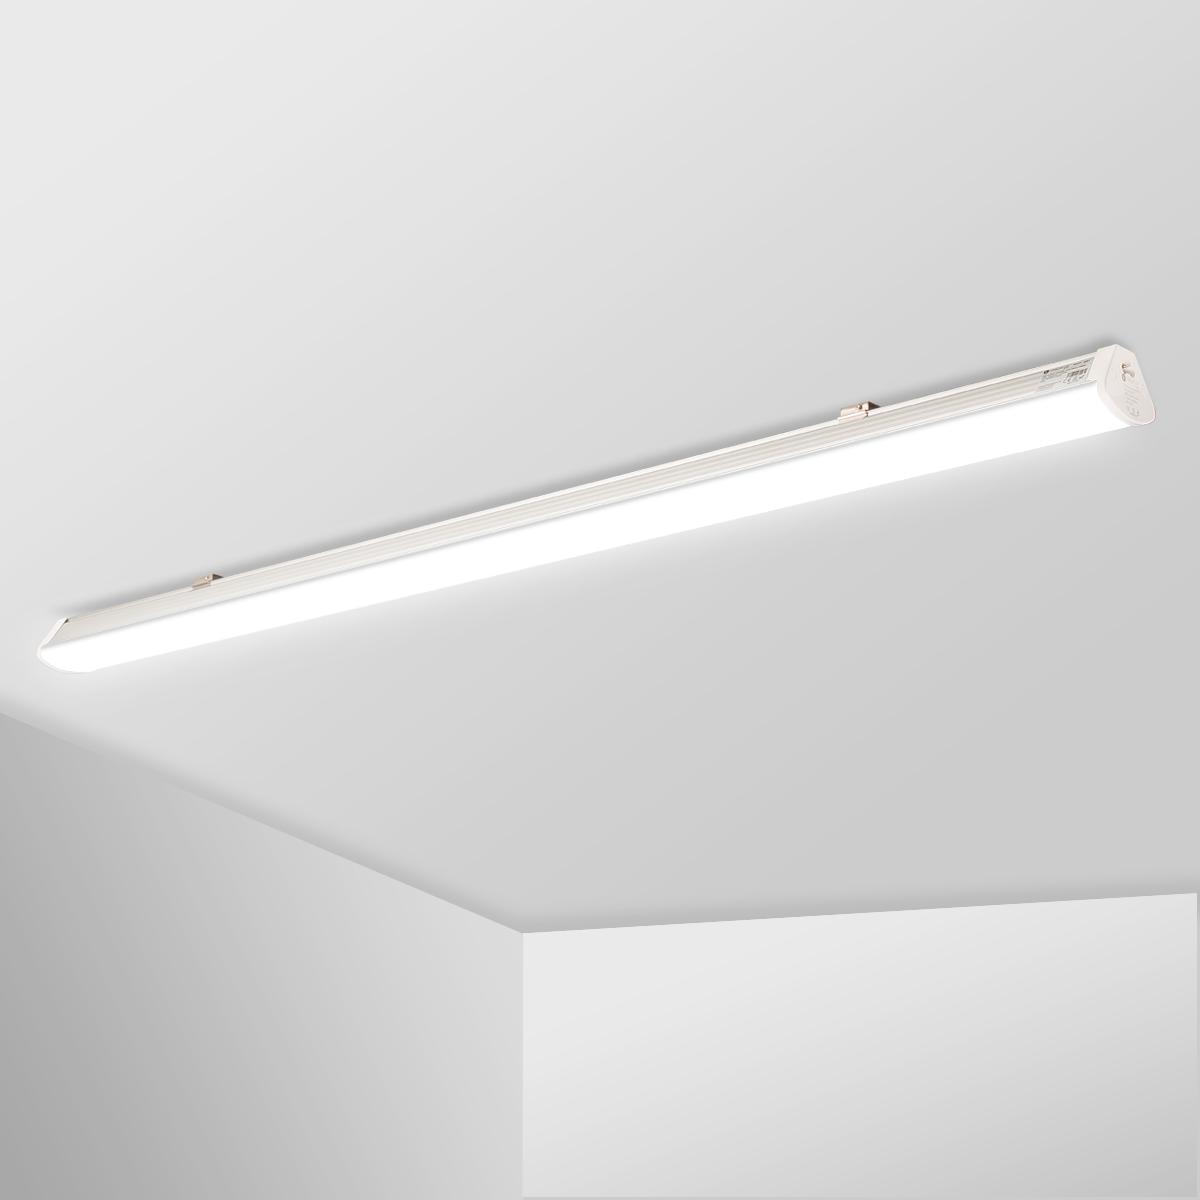 LED Linear Leuchte 120cm 40W 5200lm IP42 - Lichtfarbe: Kaltweiß 6000K